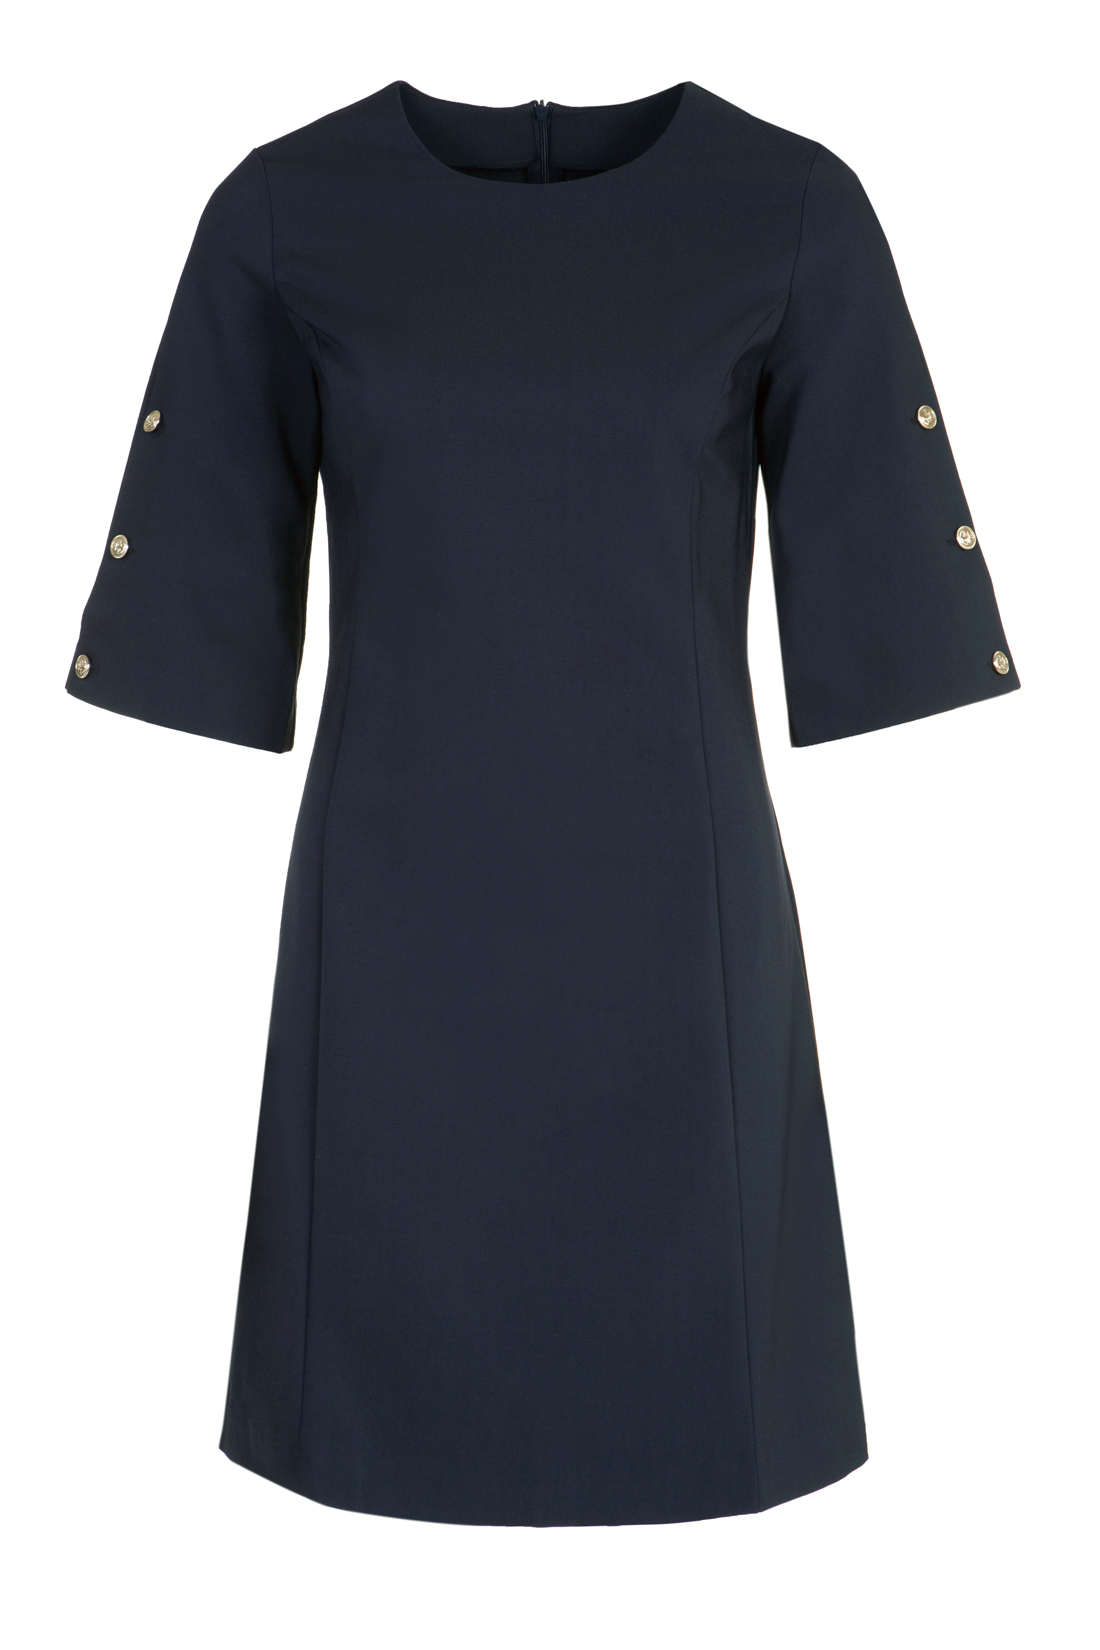 Платье с широкими рукавами (арт. baon B457032), размер XL, цвет синий Платье с широкими рукавами (арт. baon B457032) - фото 4